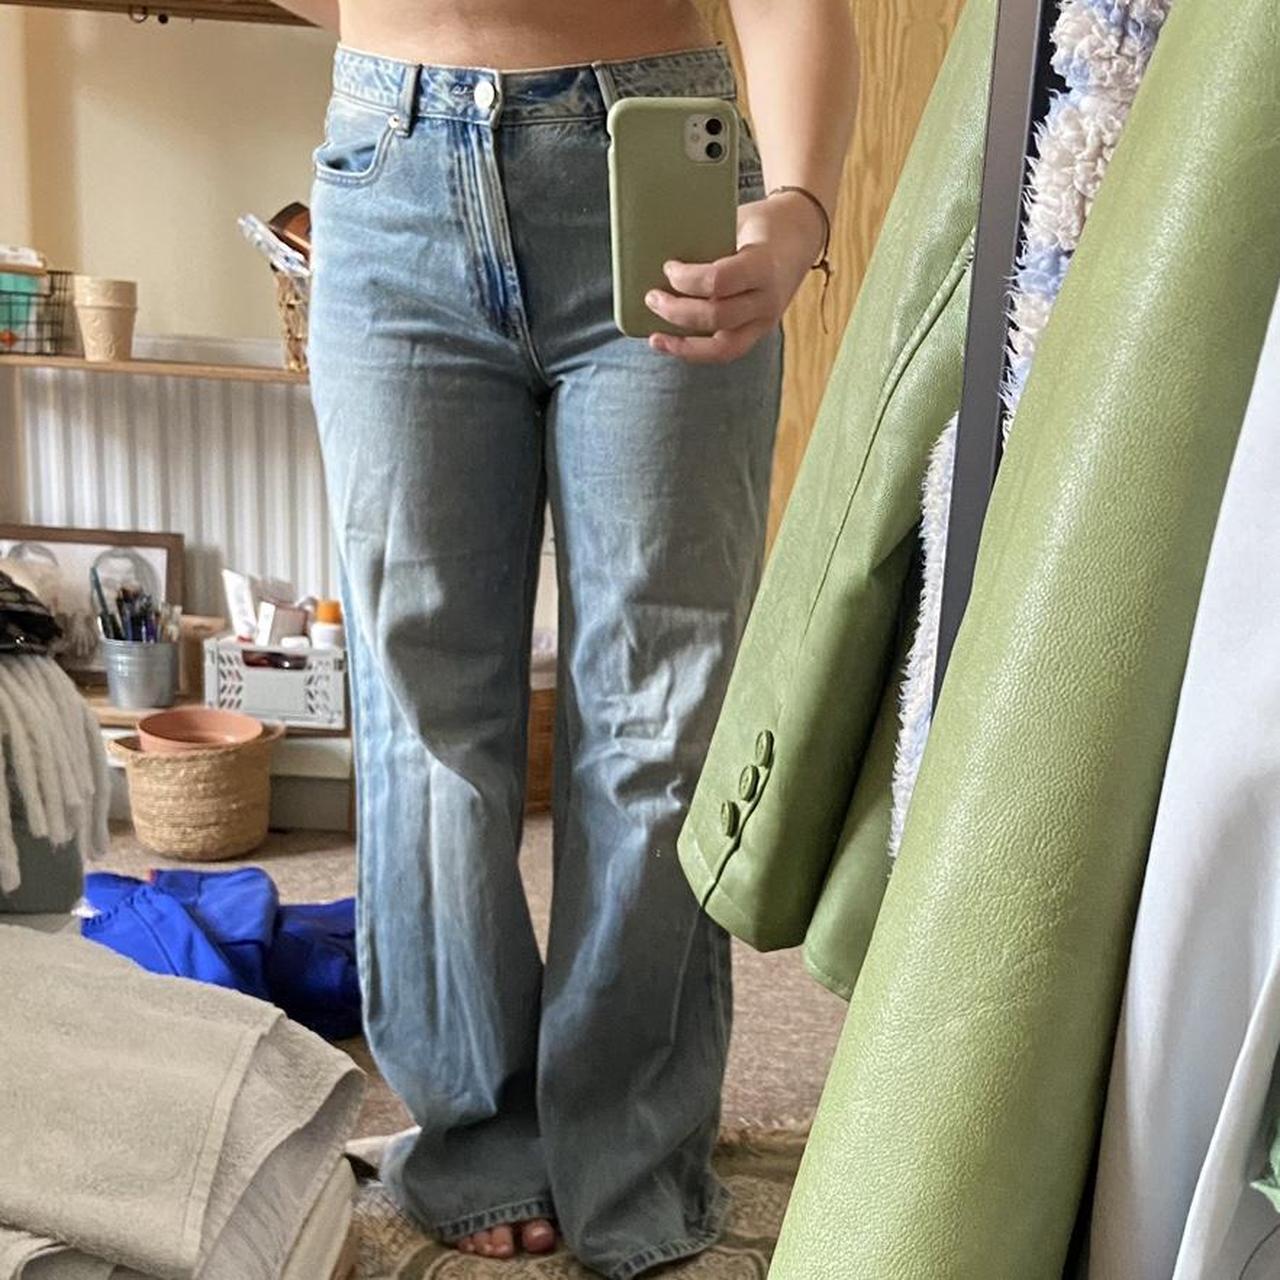 D92 straight wide-leg jeans - Women's fashion